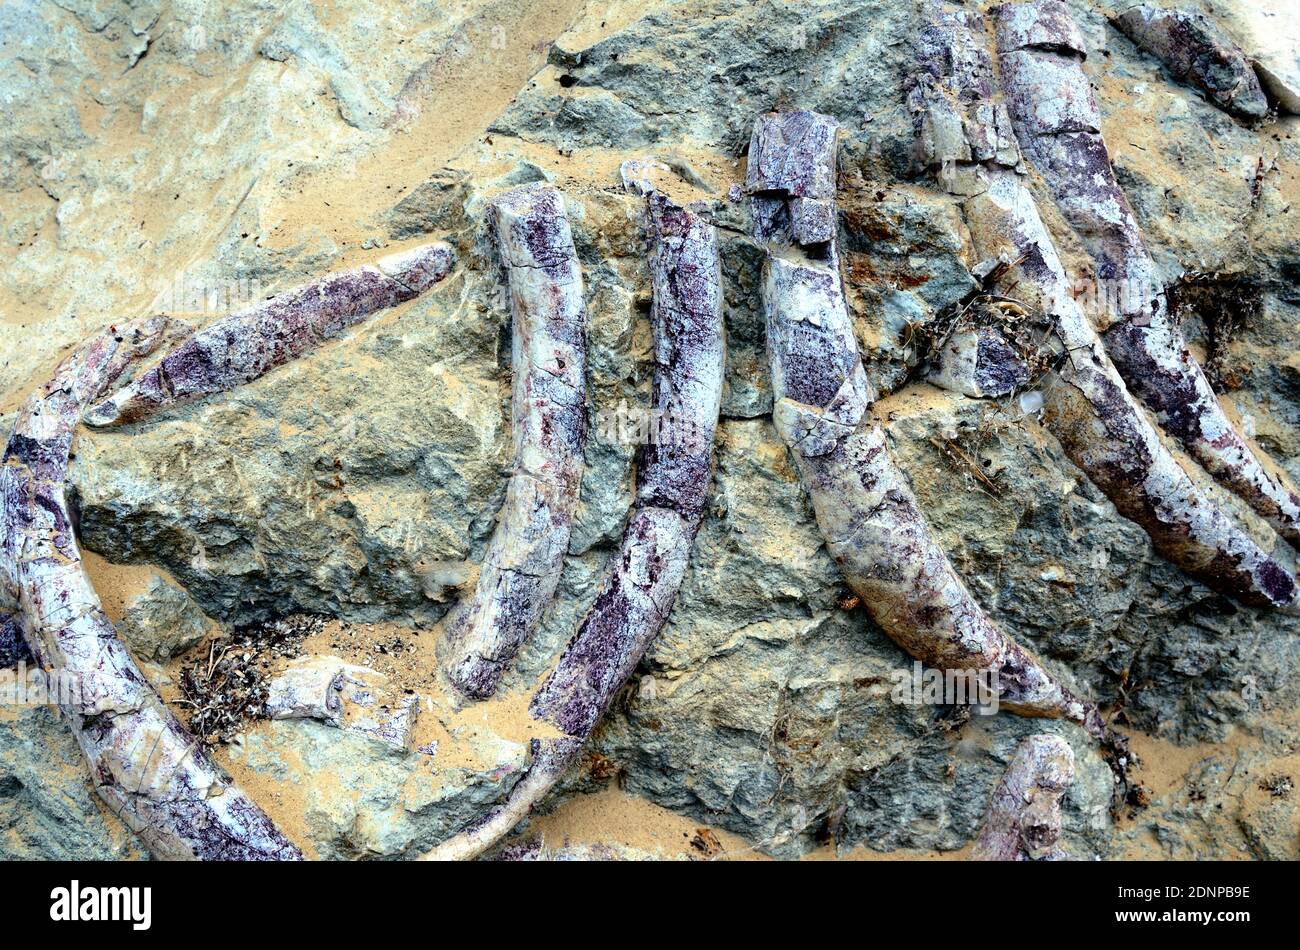 Fossilised Rib Cage & Bones of Sirenia Sea Mammals, ancestors of Dugong or Sea Cows, Vallée des Sireniens, Castellane Alpes-de-Haute-Provence France Stock Photo